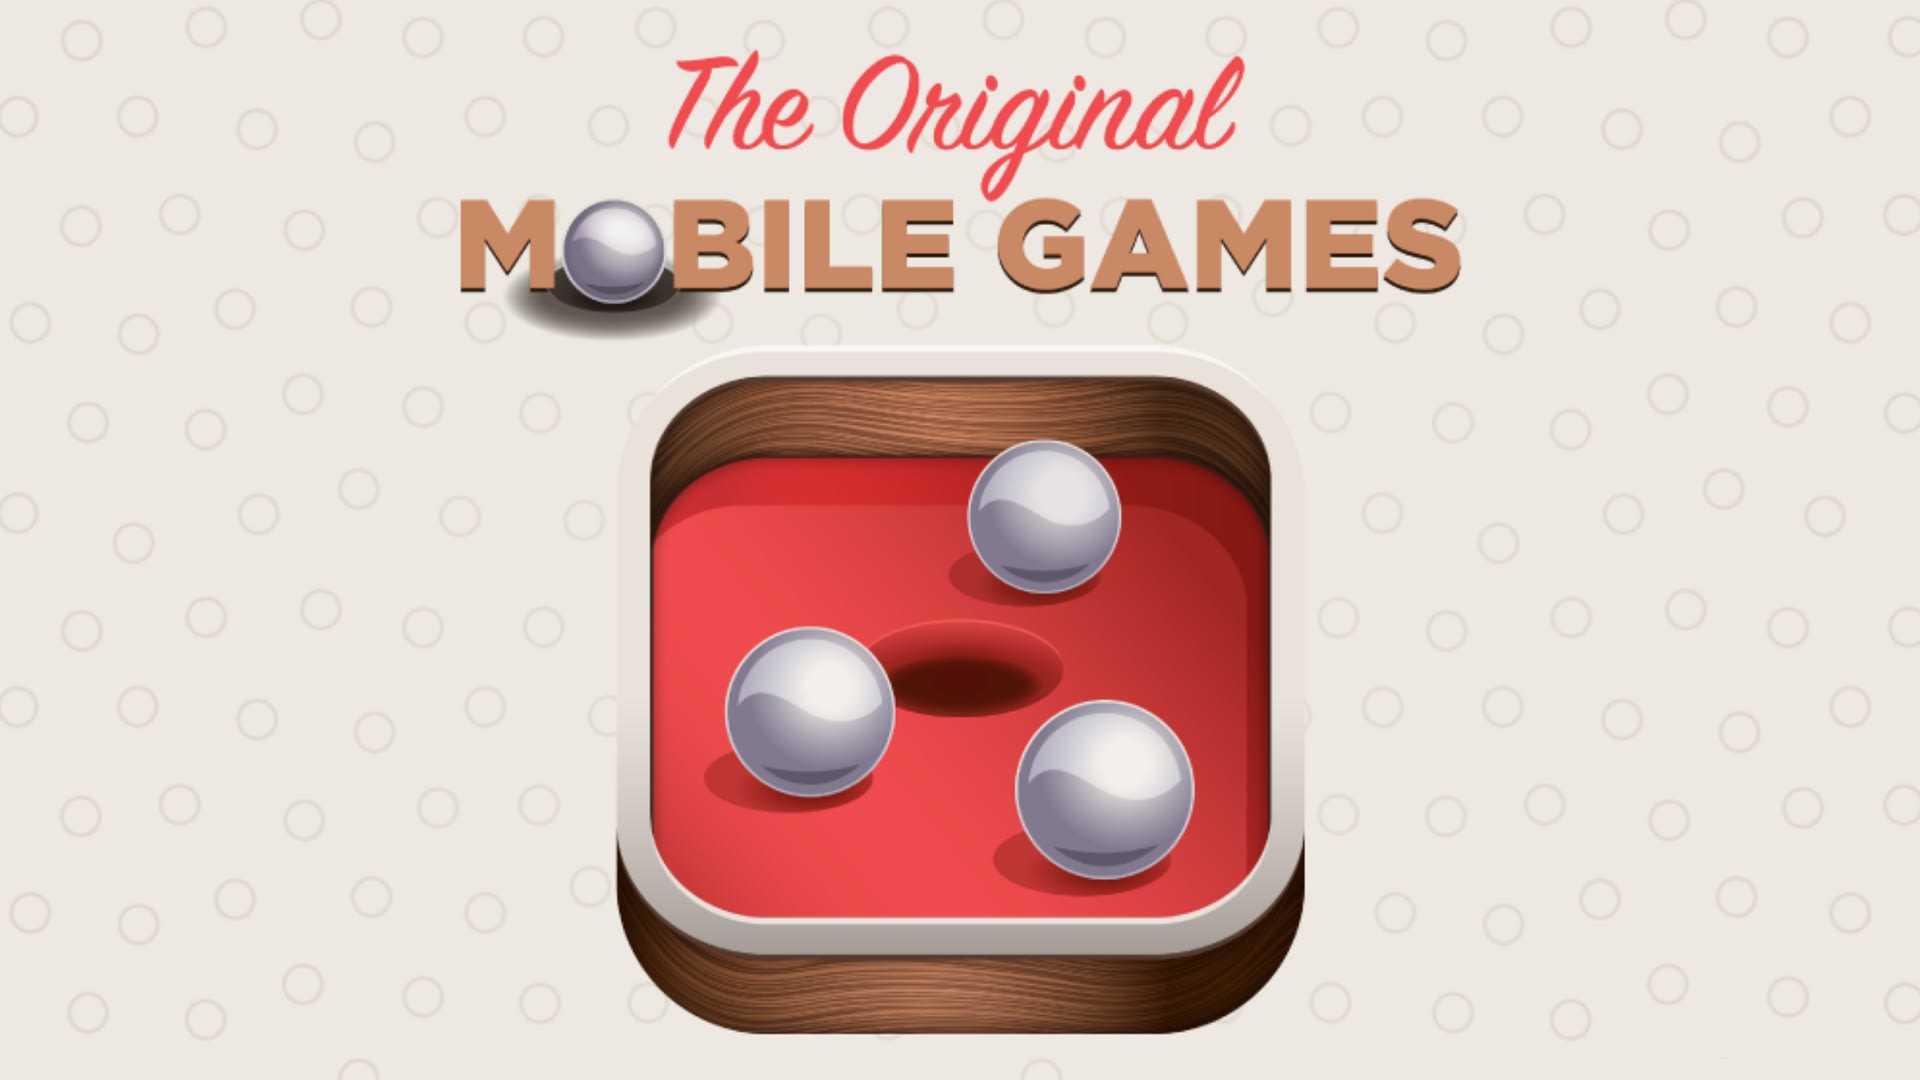 The Original Mobile Games